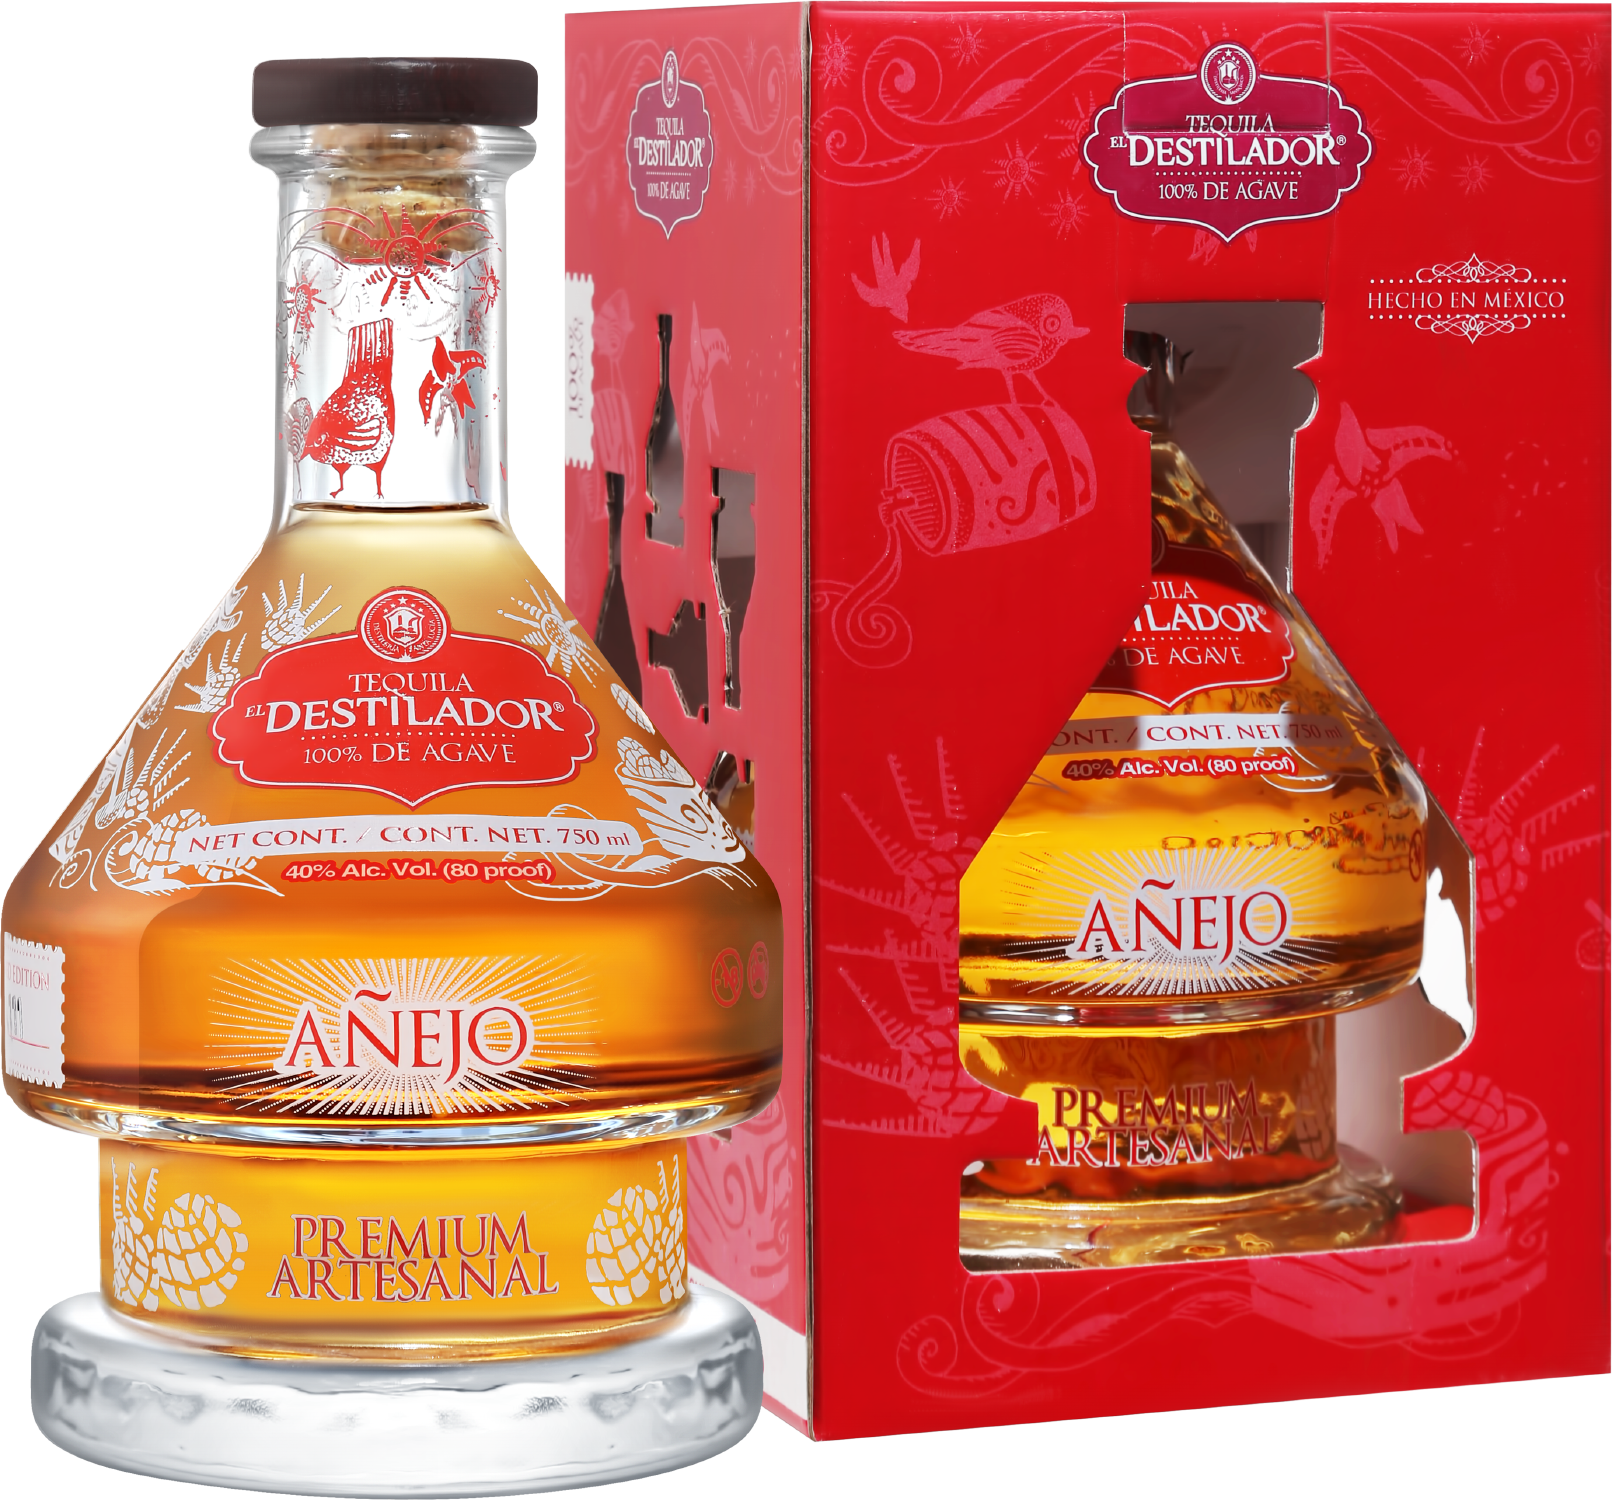 El Destilador Premium Artesanal Anejo Santa Lucia (gift box) don julio anejo gift box